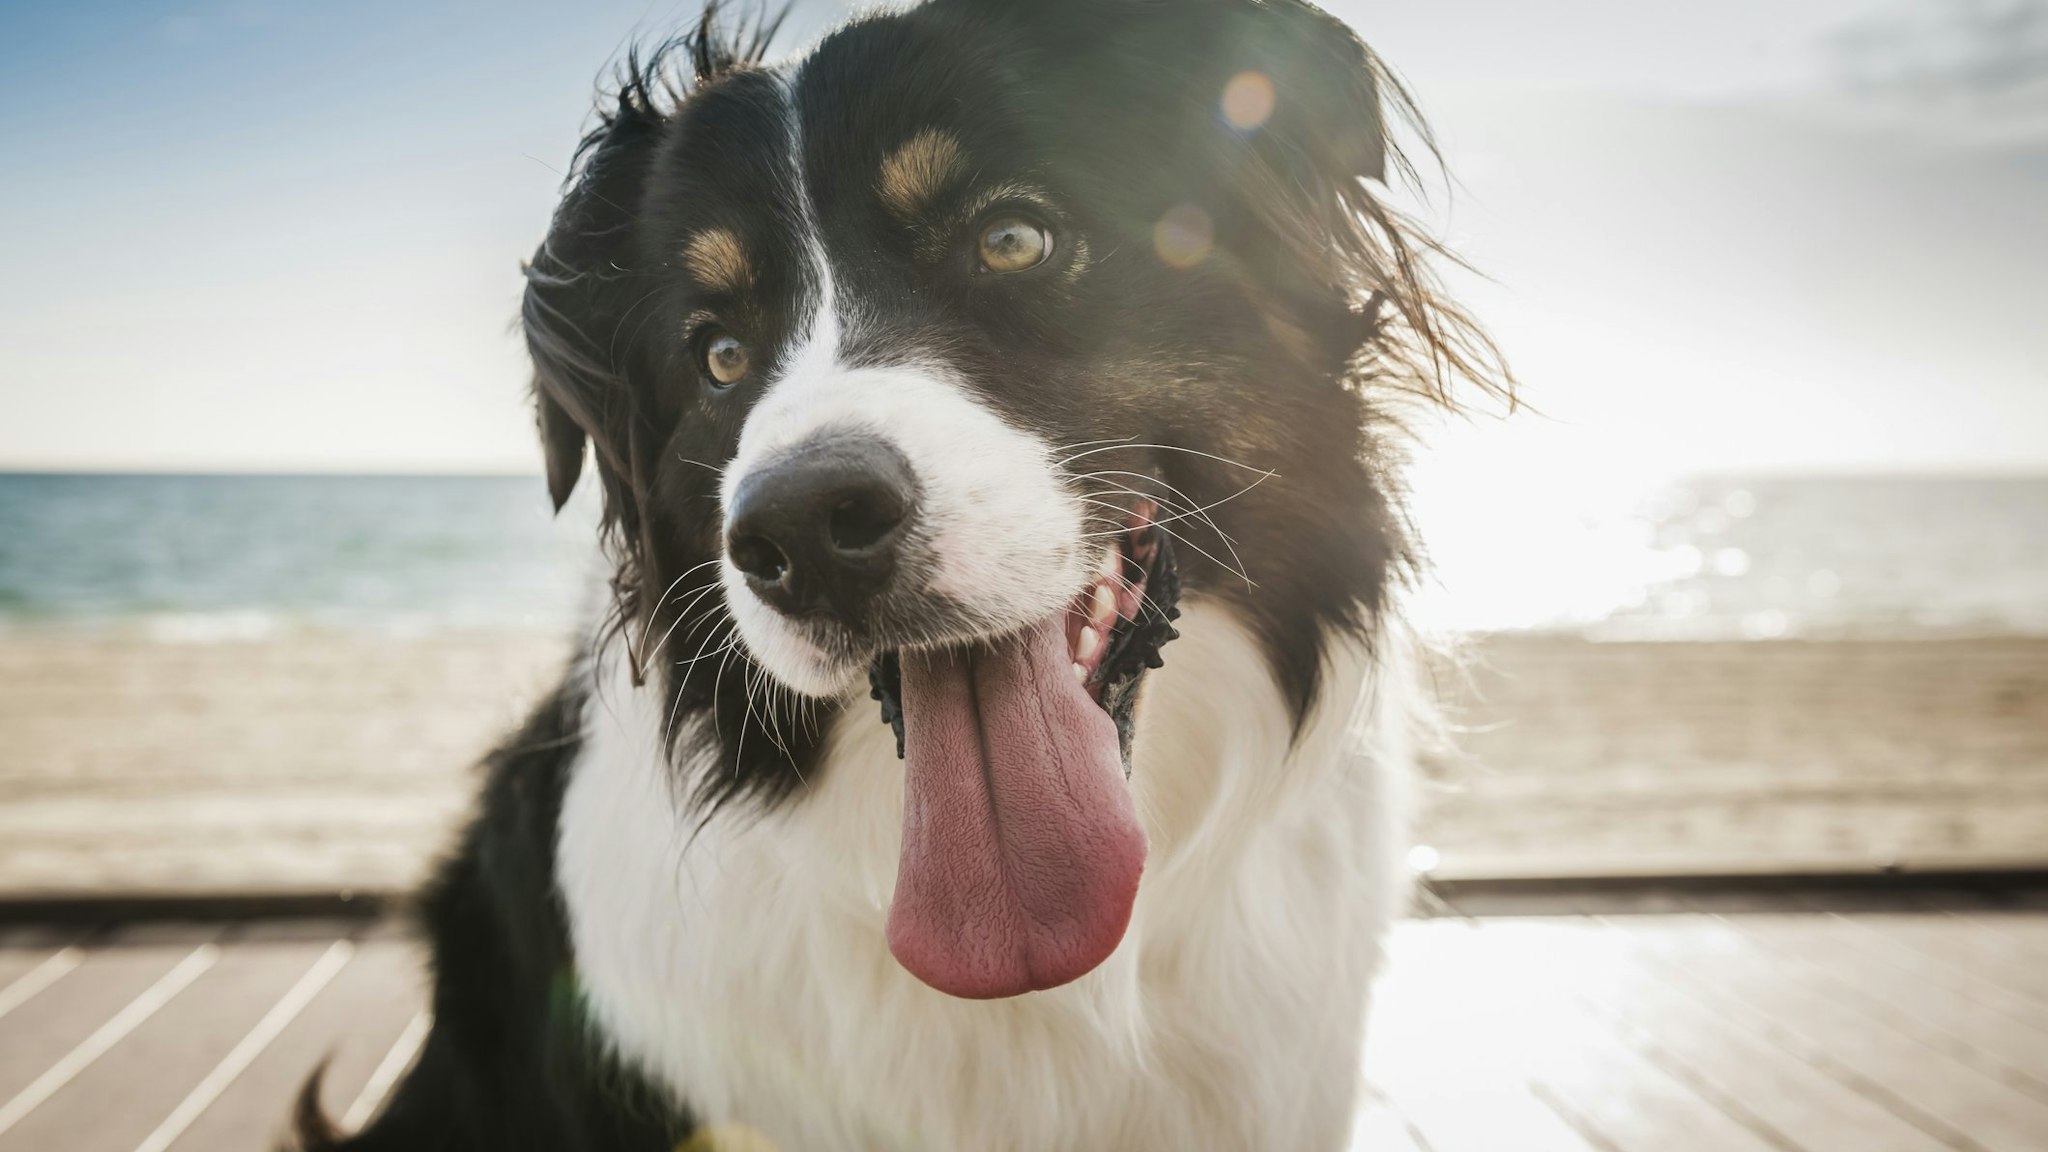 Dog on windy boardwalk - stock photo